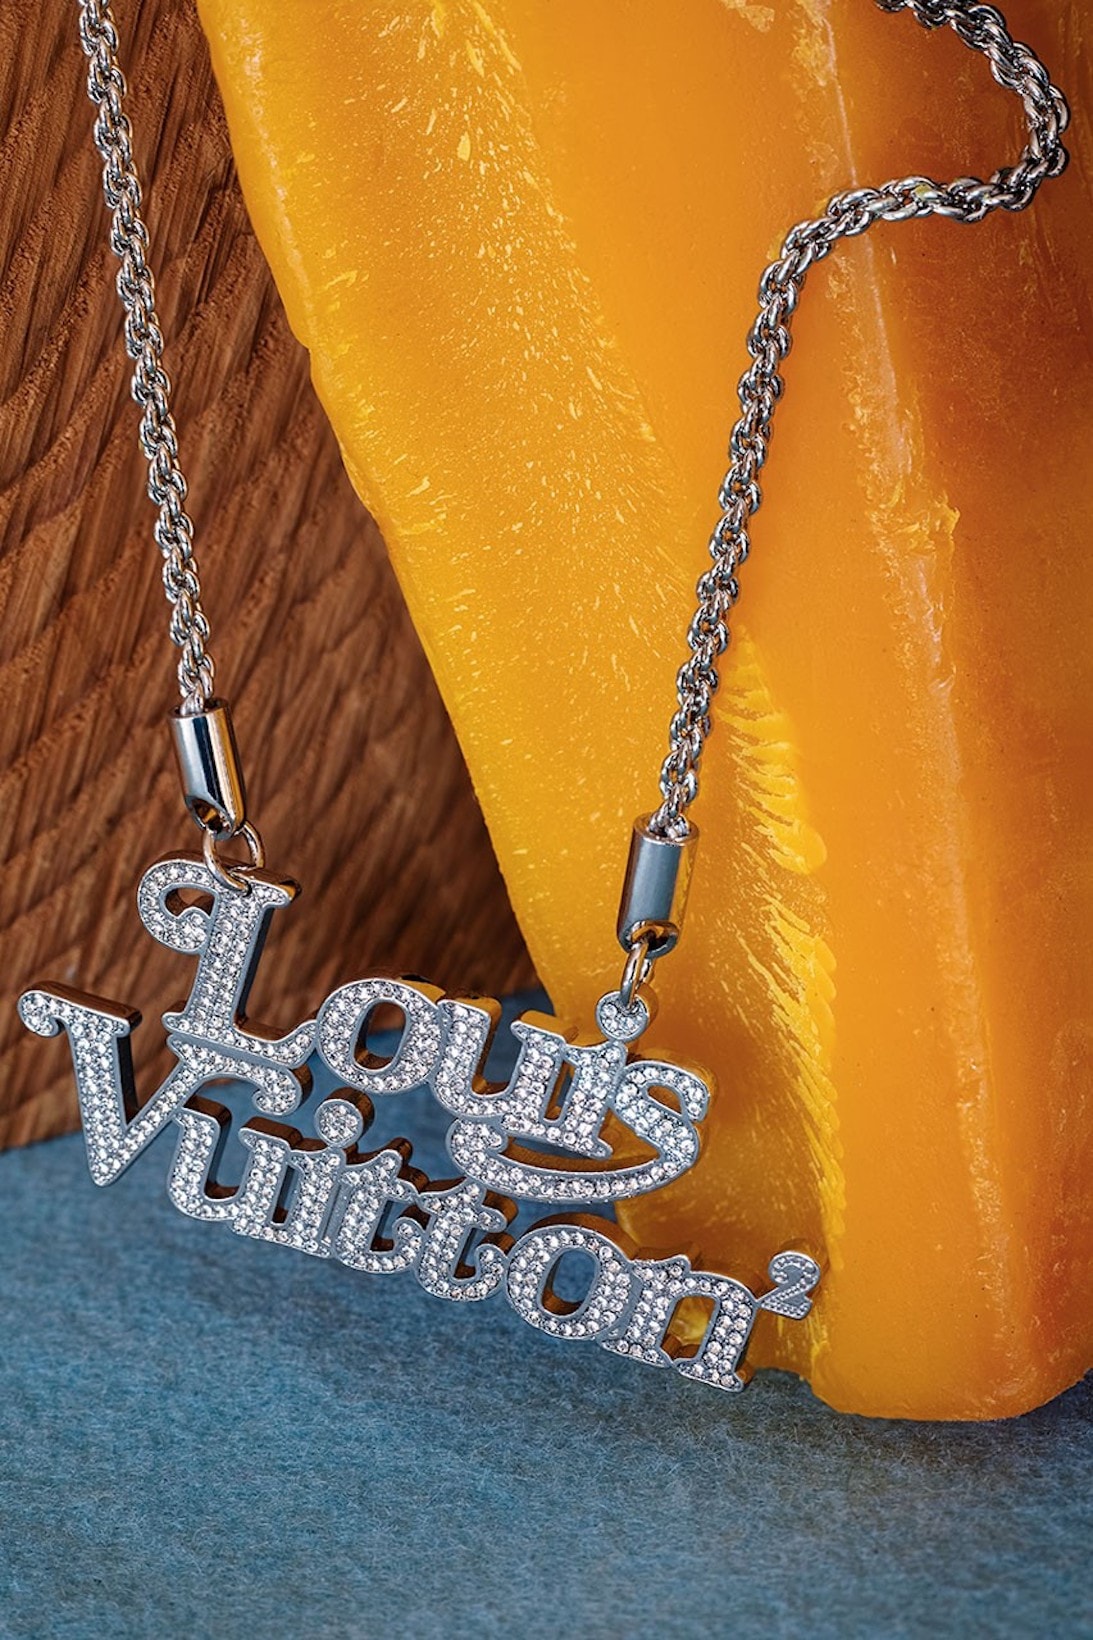 Louis Vuitton Unveils New Jewelry Line by Virgil Abloh